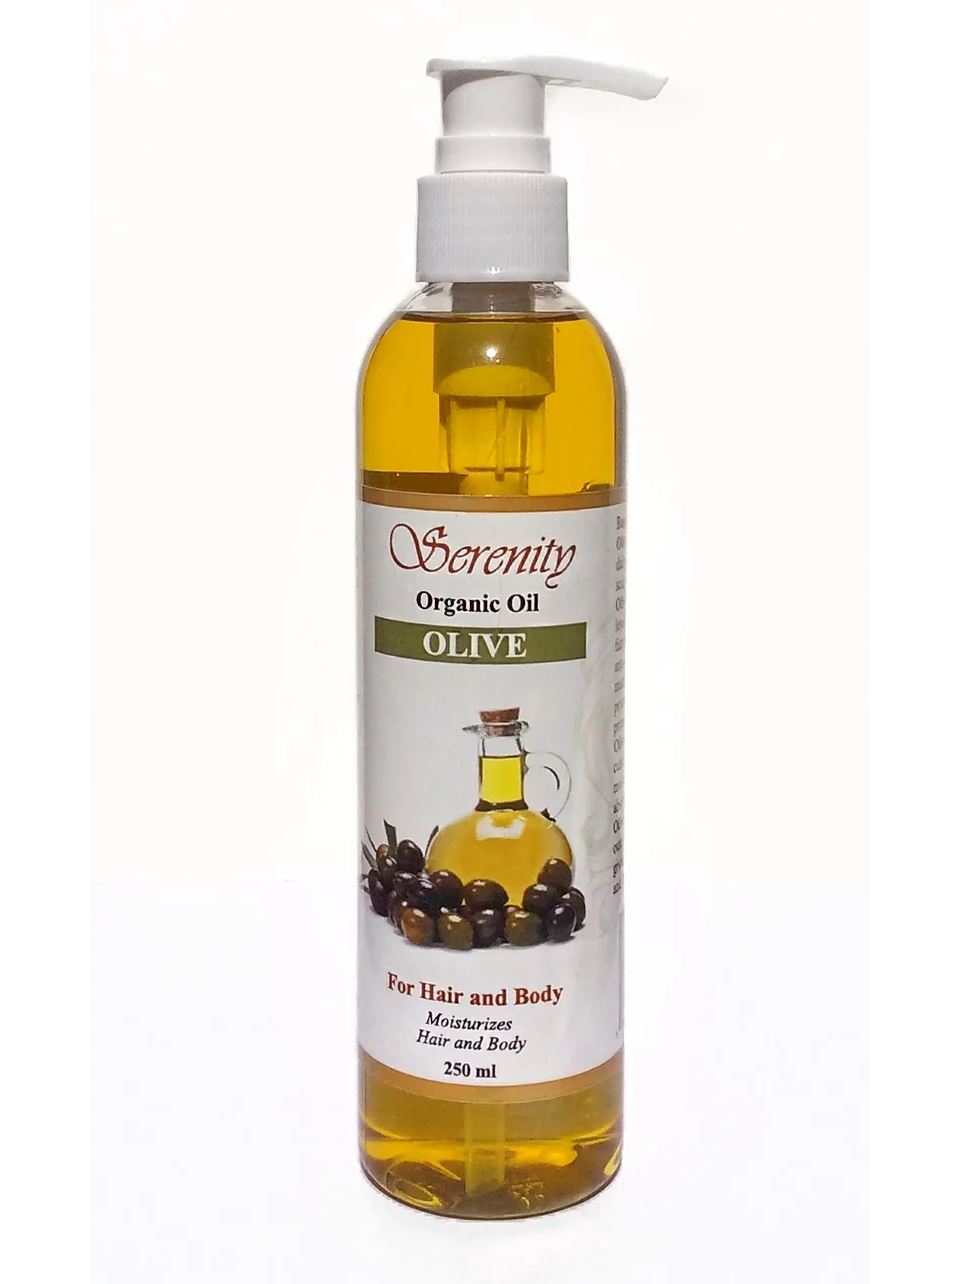 Serenity Olive Oil